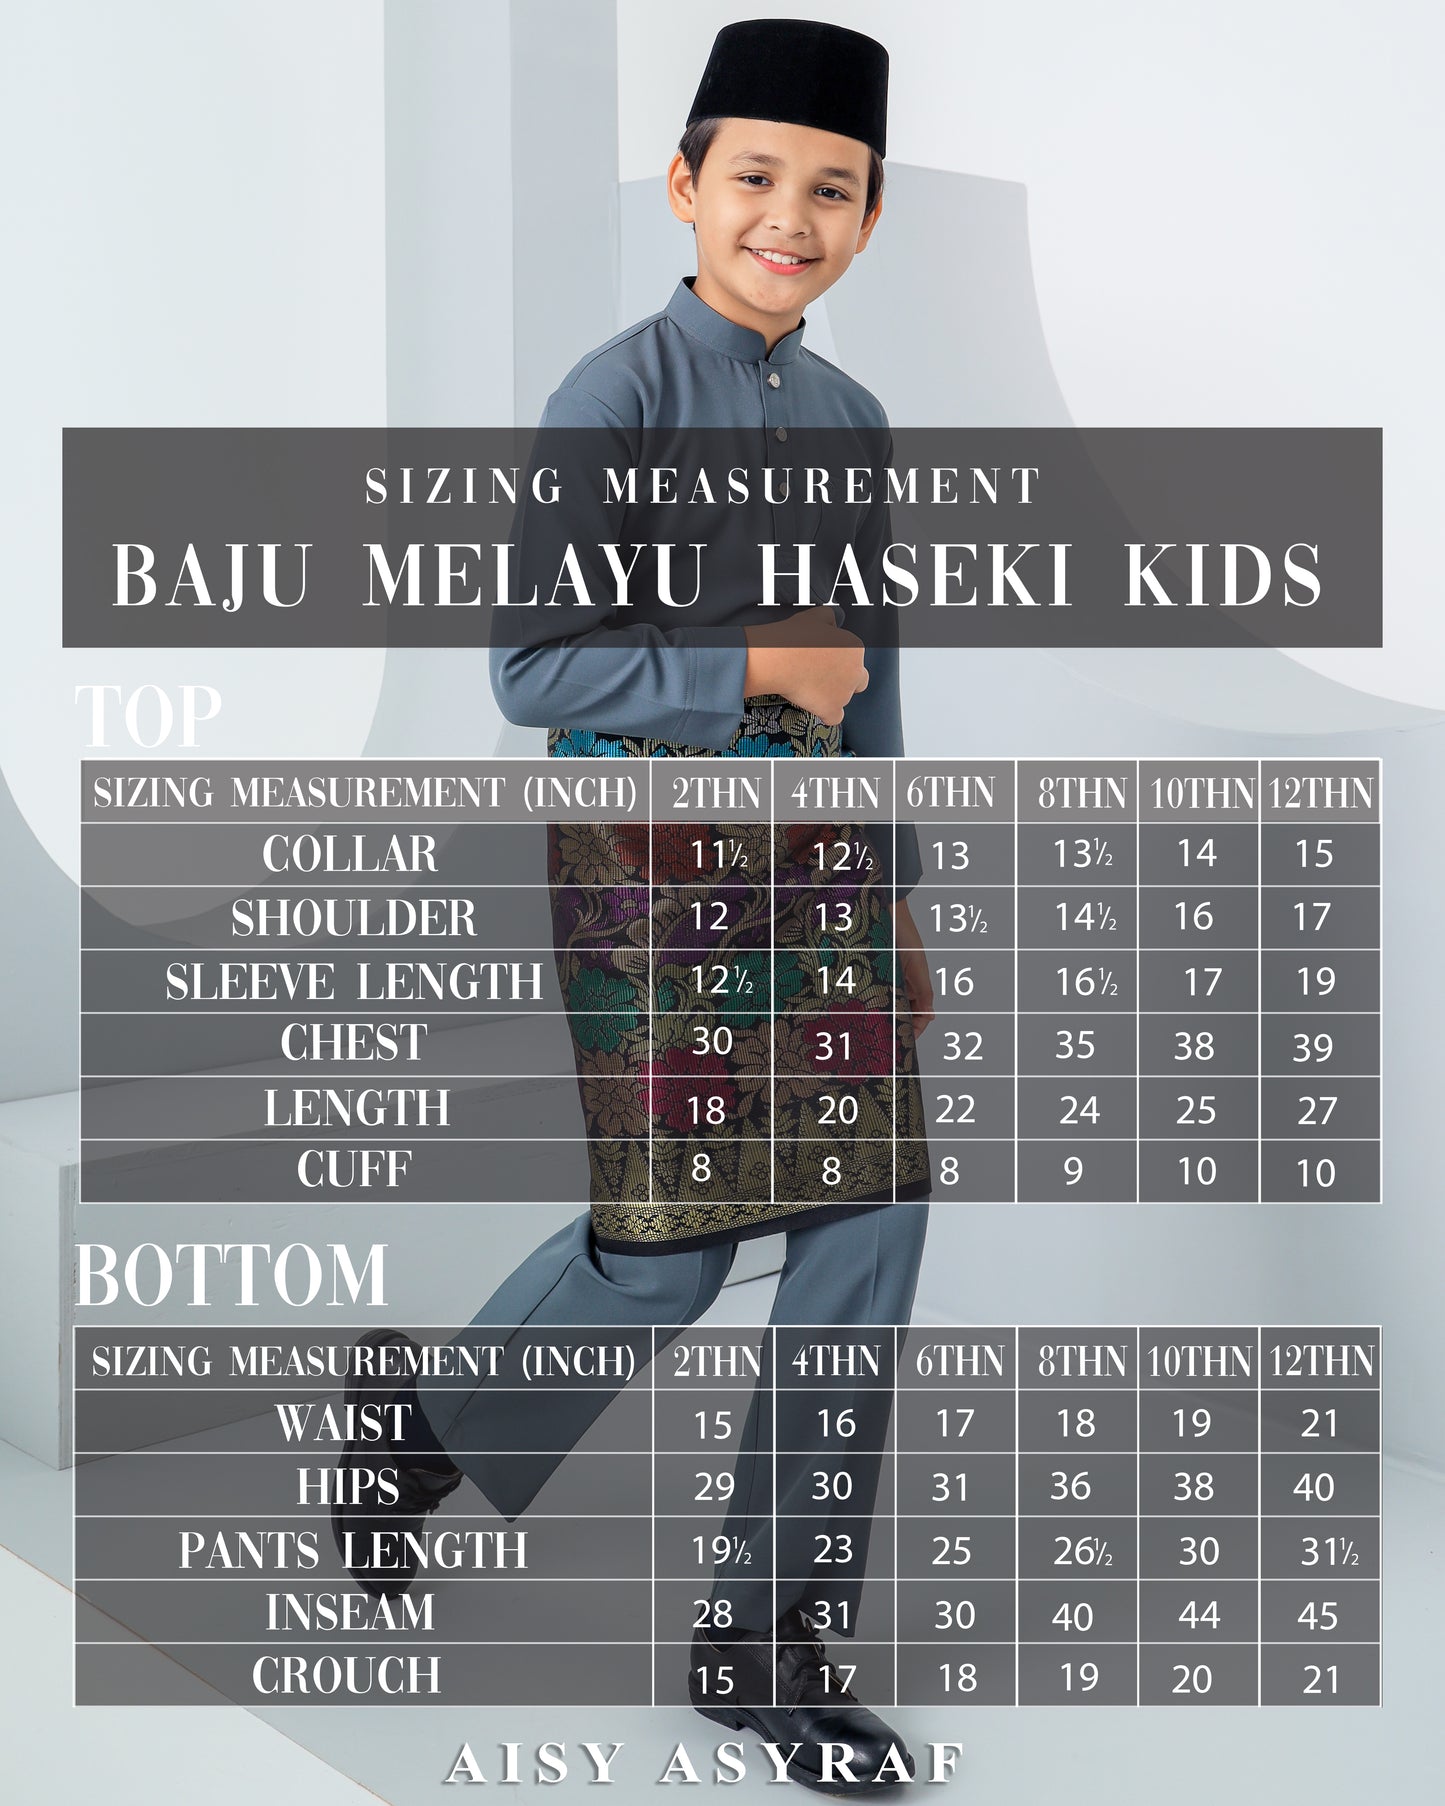 Baju Melayu Haseki Kids - Peach